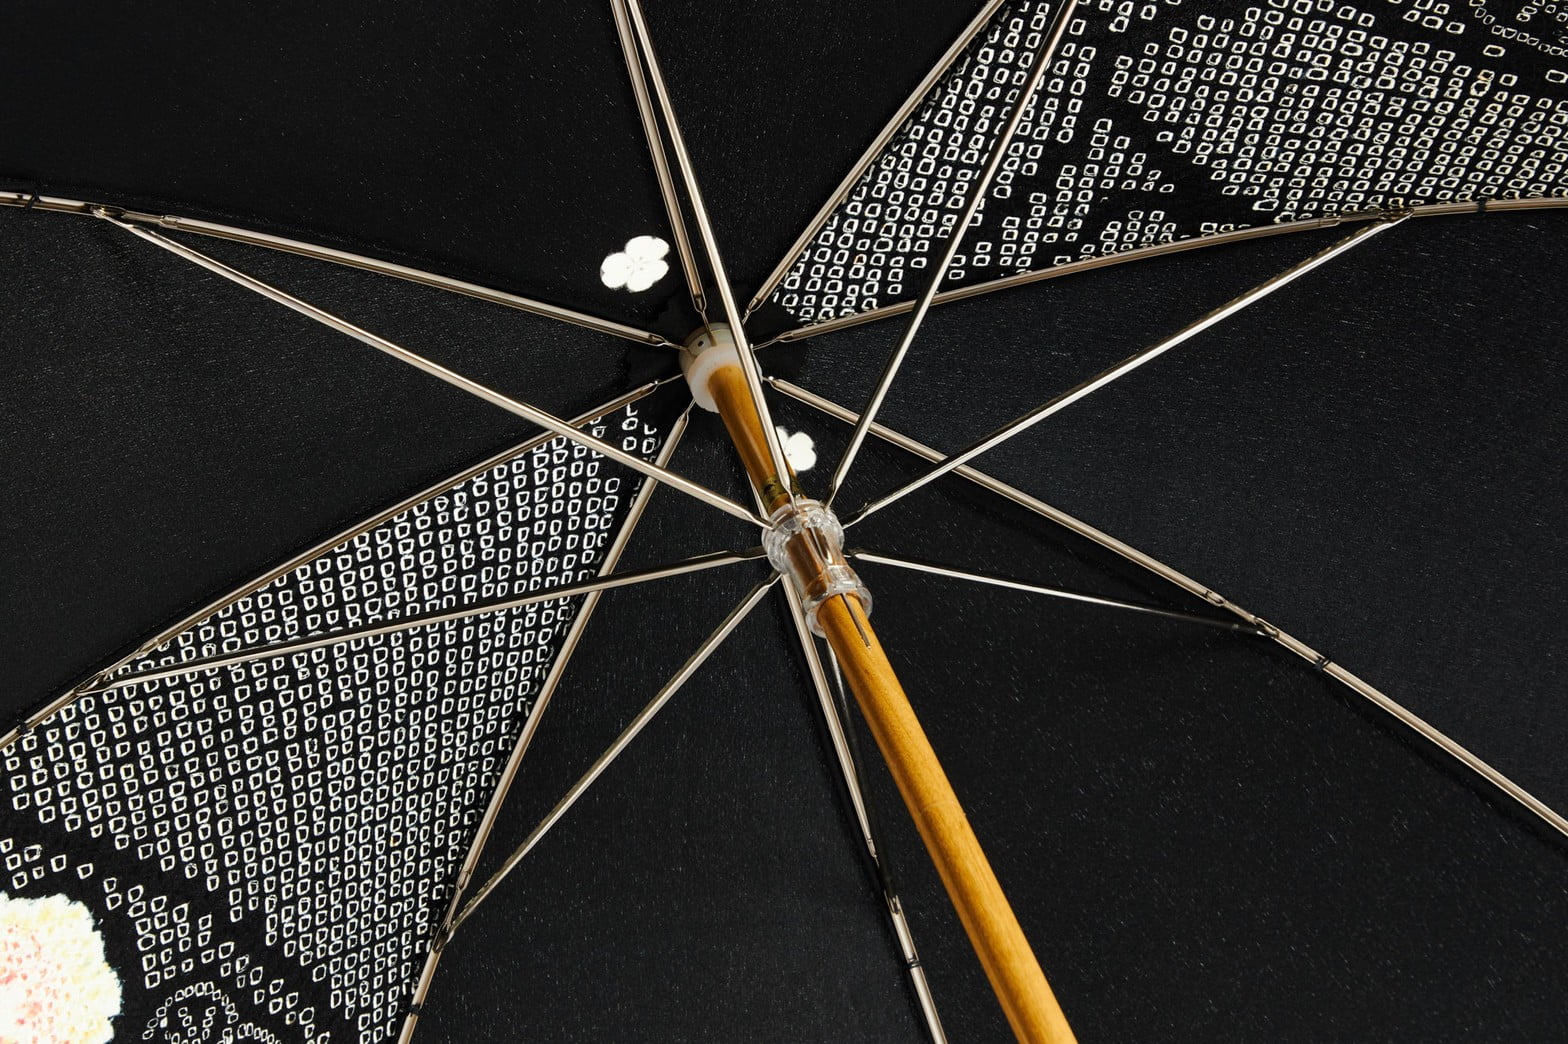 Japanese Kamon Shibori Umbrella Underside View